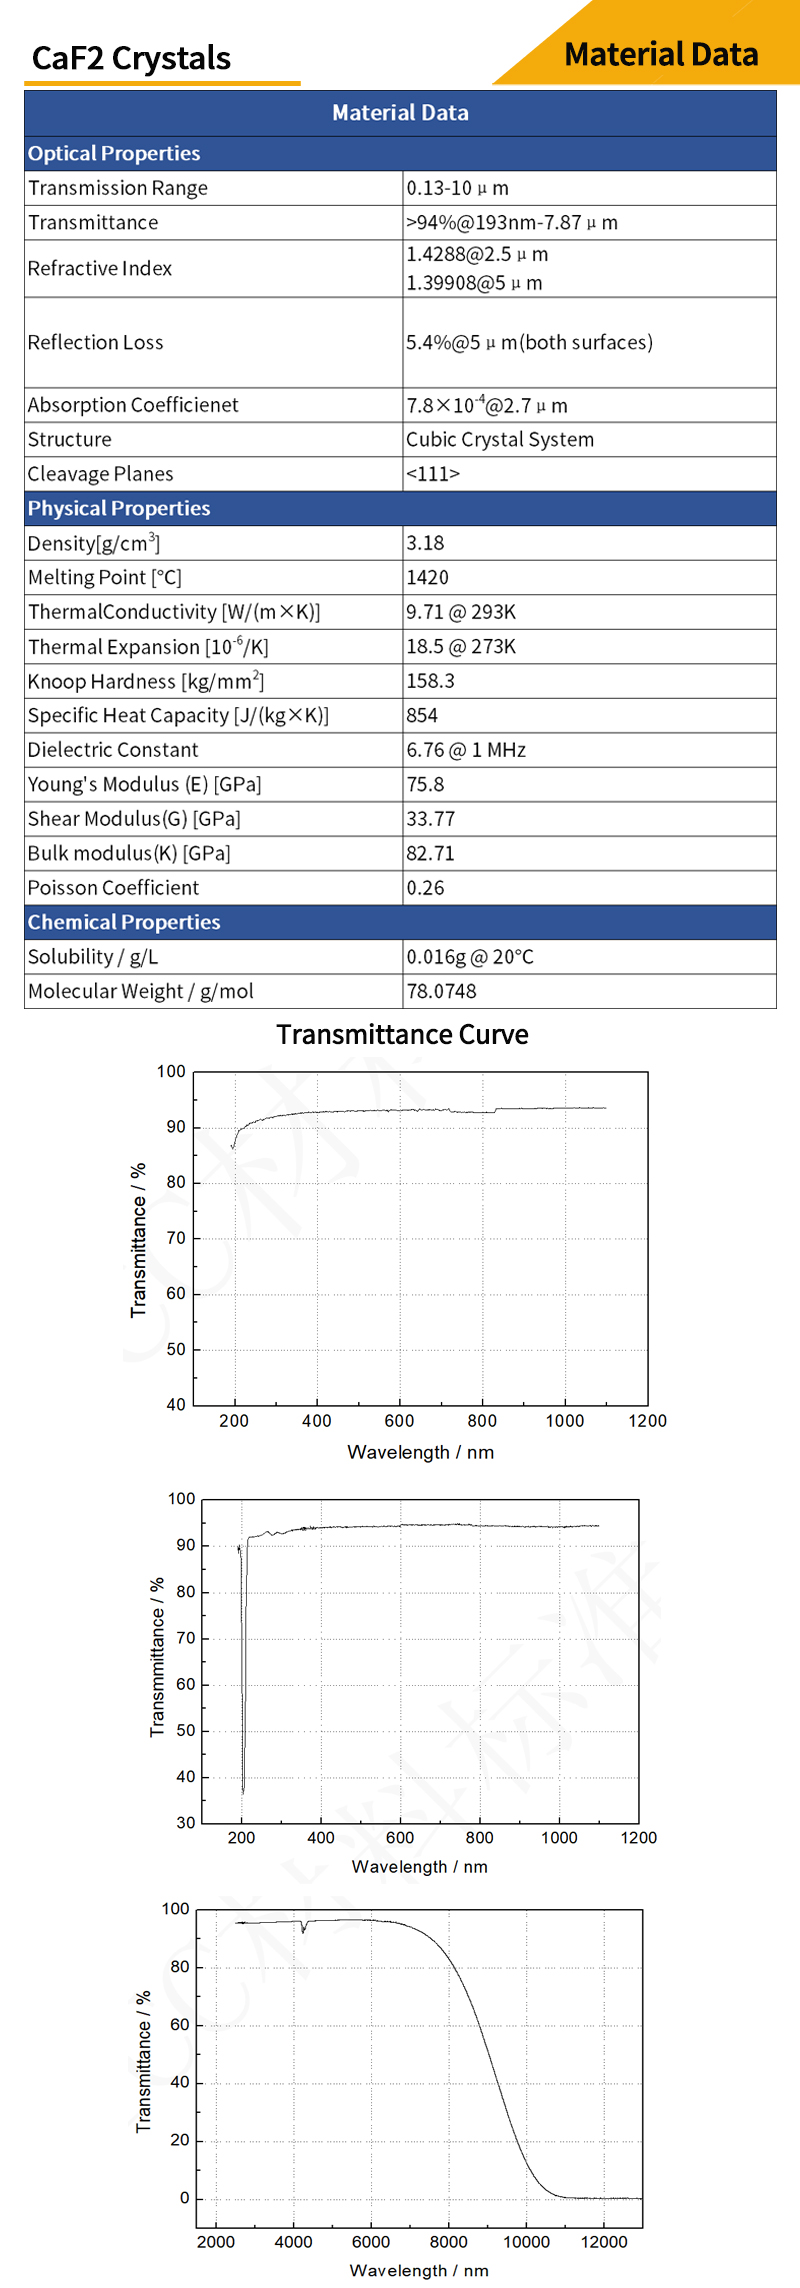 VUV grade calcium fluoride material data and transmittance curves